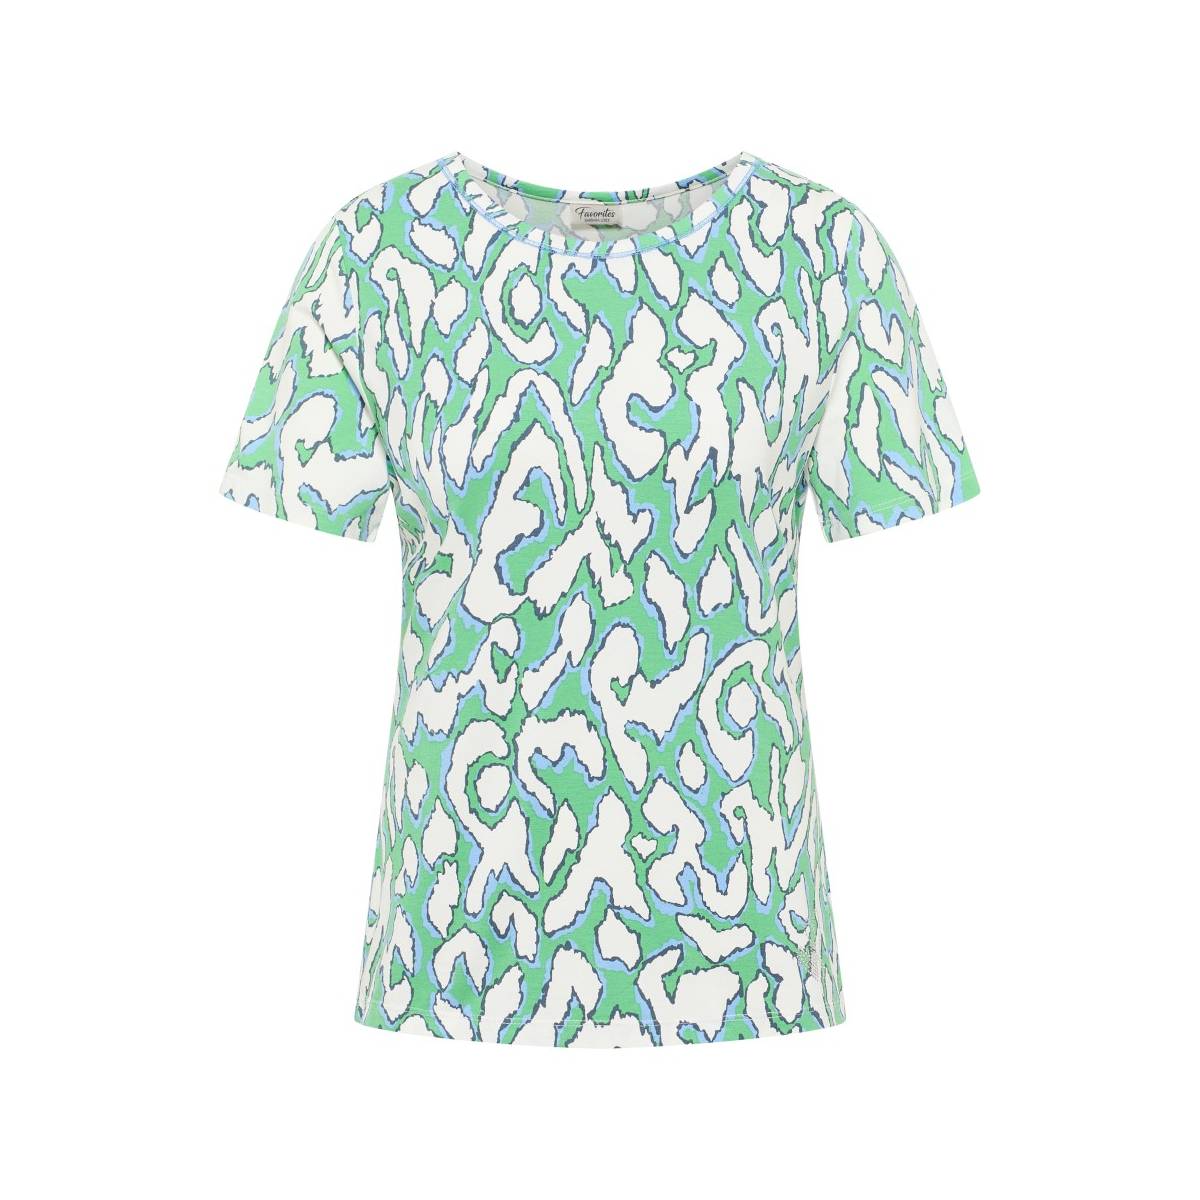 LEBEK  t shirts groen -  model 57610042 - Dameskleding t shirts groen